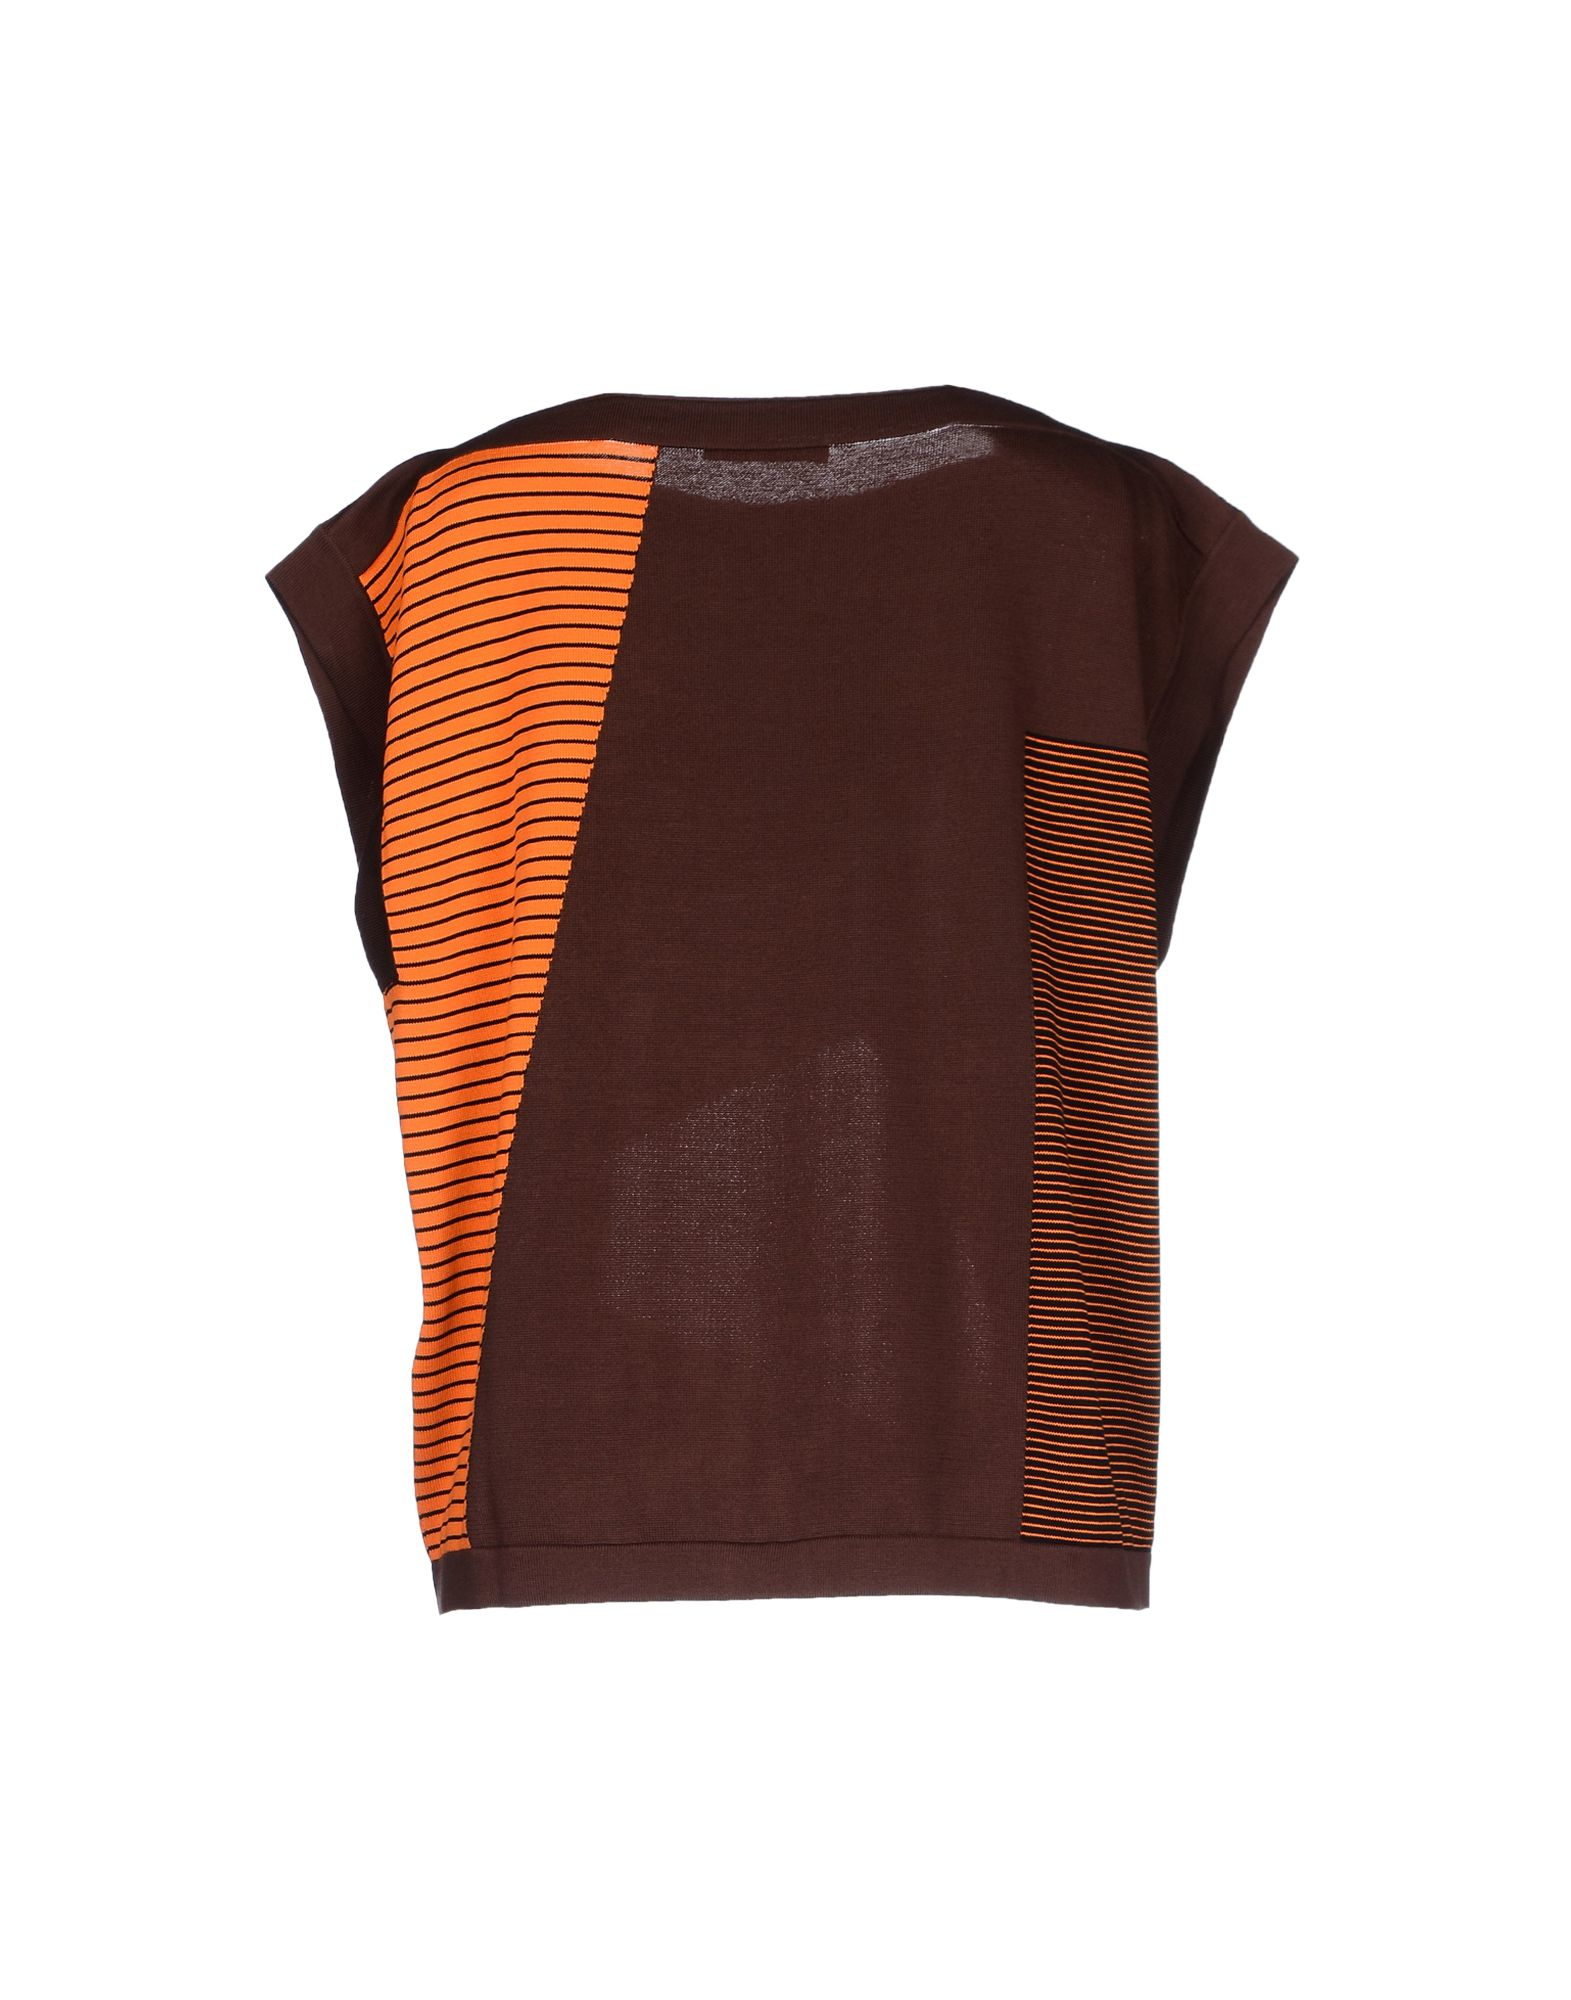 Lyst - Gentry portofino Sweater in Brown